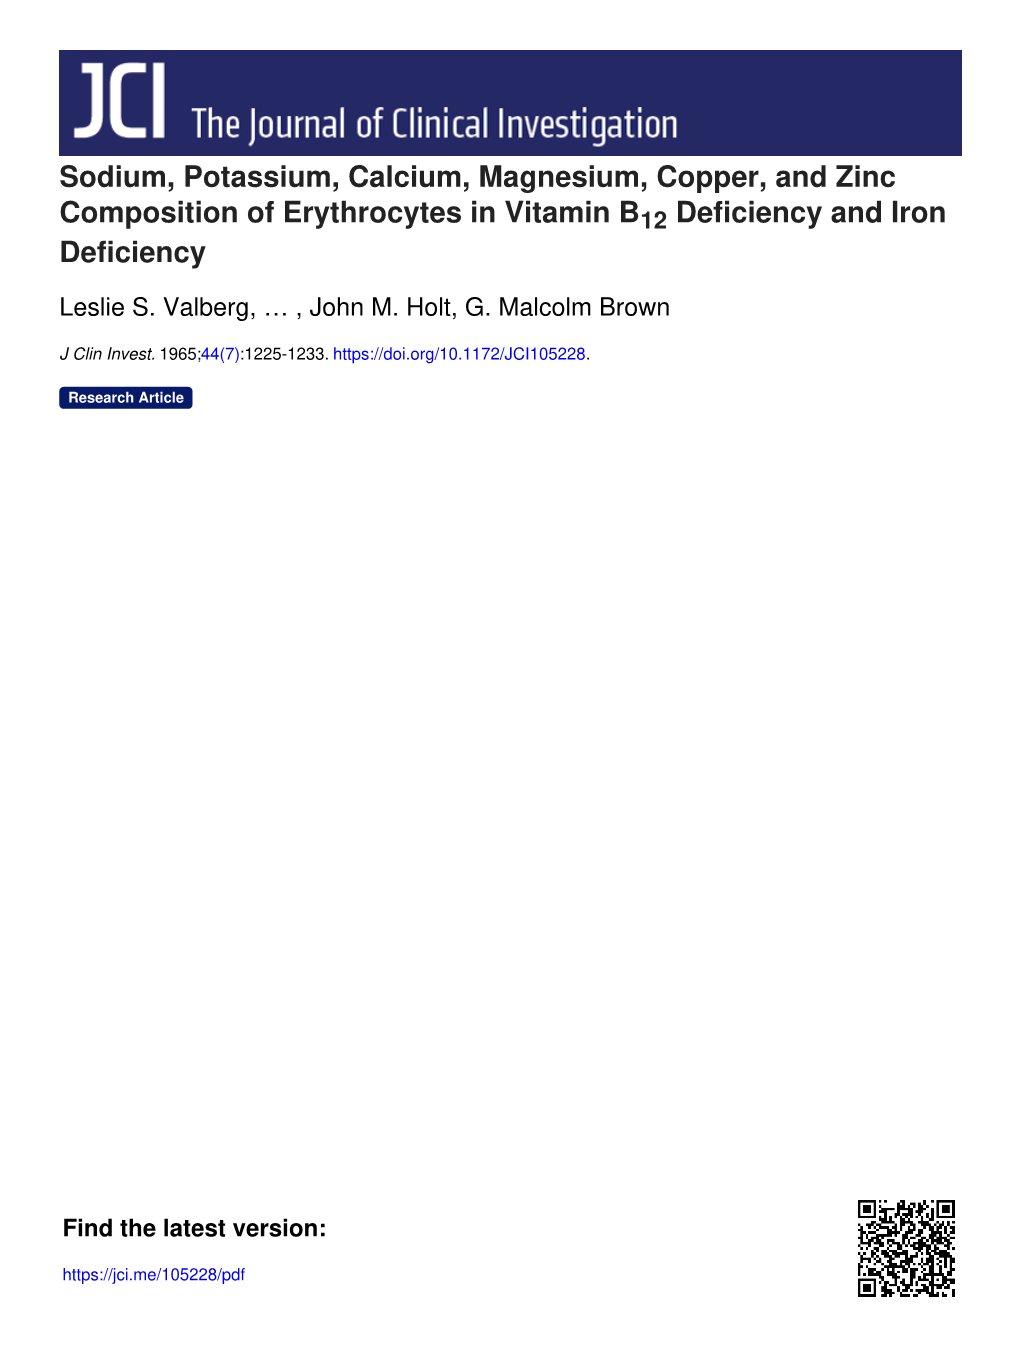 Sodium, Potassium, Calcium, Magnesium, Copper, and Zinc Composition of Erythrocytes in Vitamin B12 Deficiency and Iron Deficiency